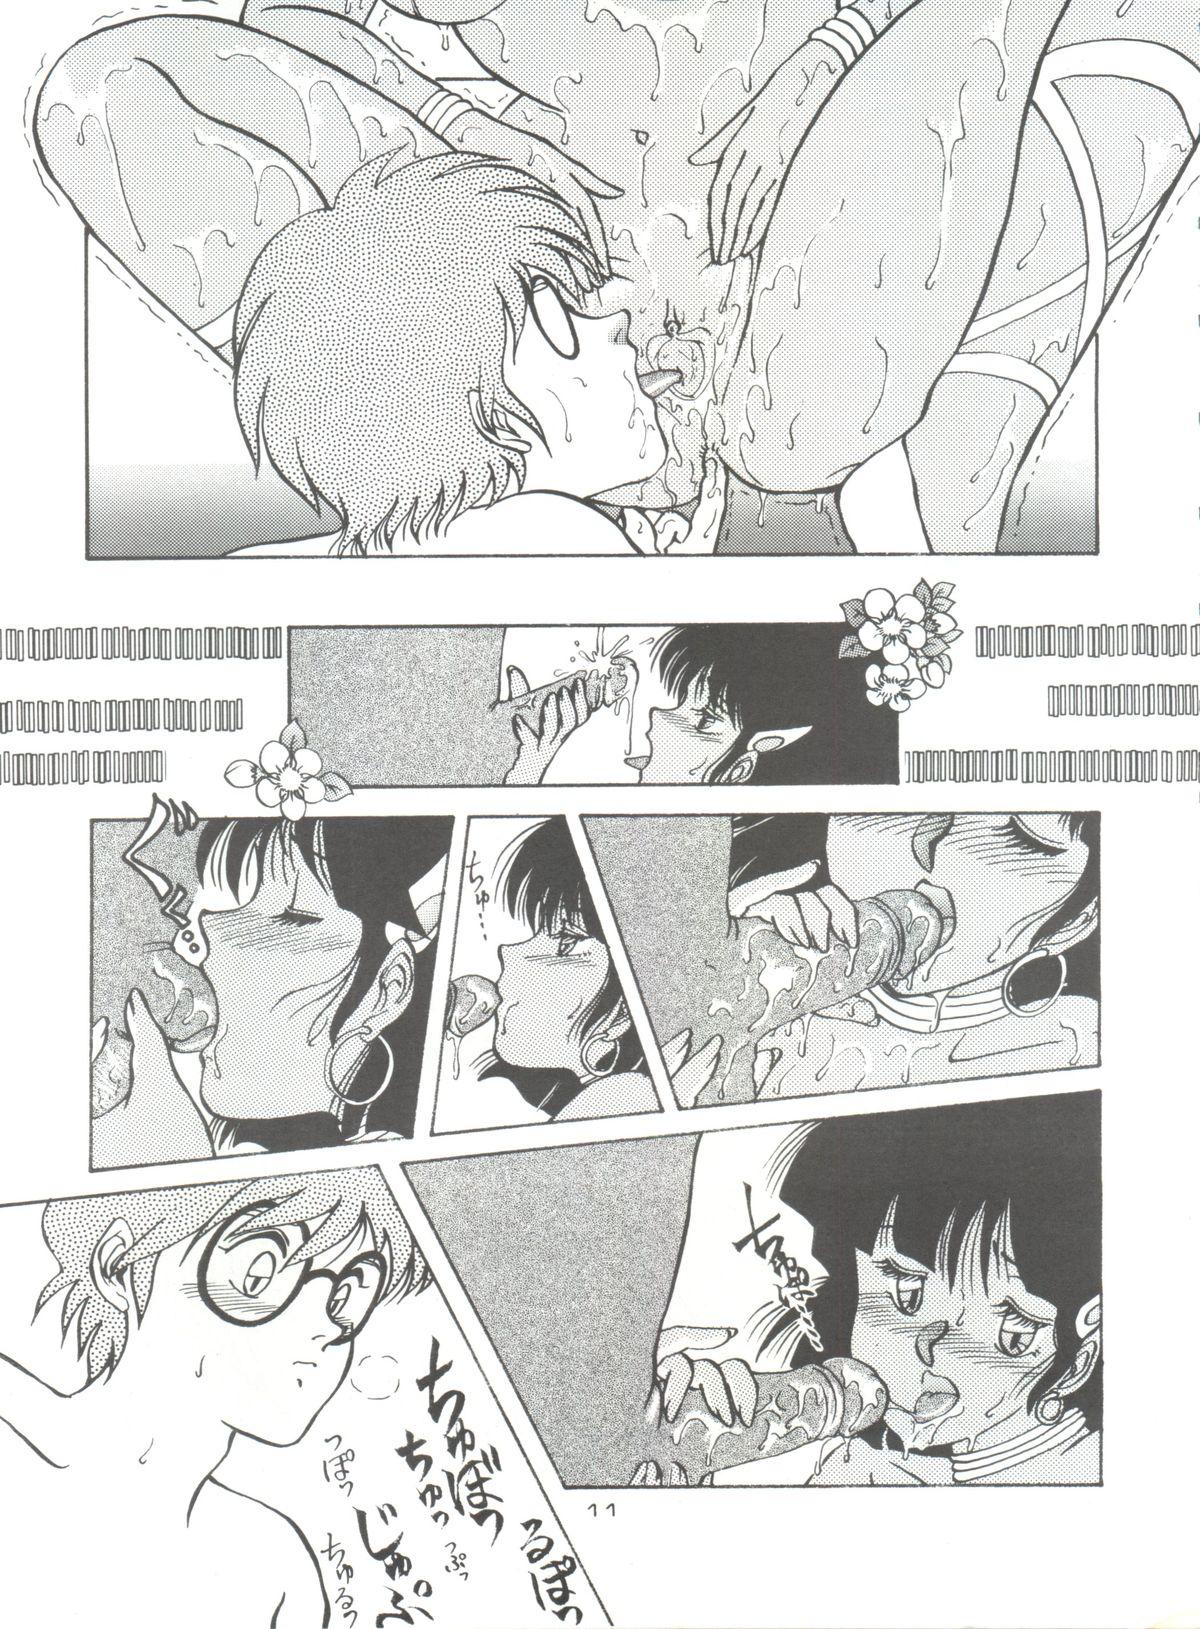 Balls Nadia Girls in Emerald Sea vol. 2 - Minies Club 23 - Fushigi no umi no nadia Naked - Page 11